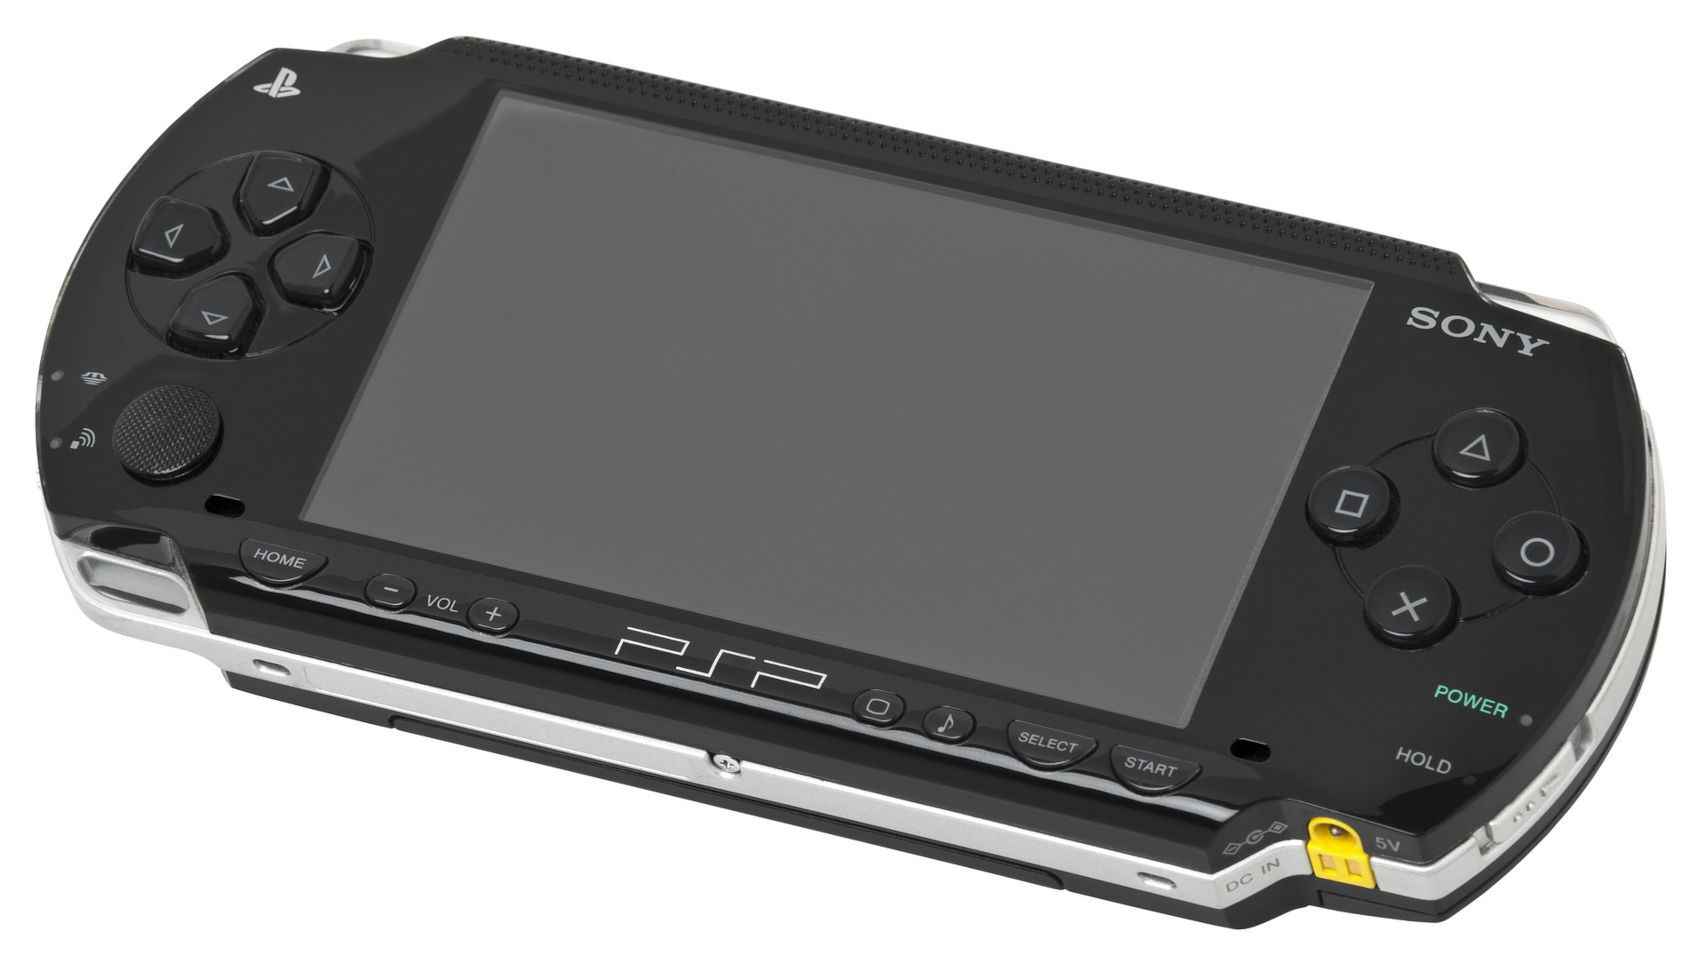 La consola PSP de Sony